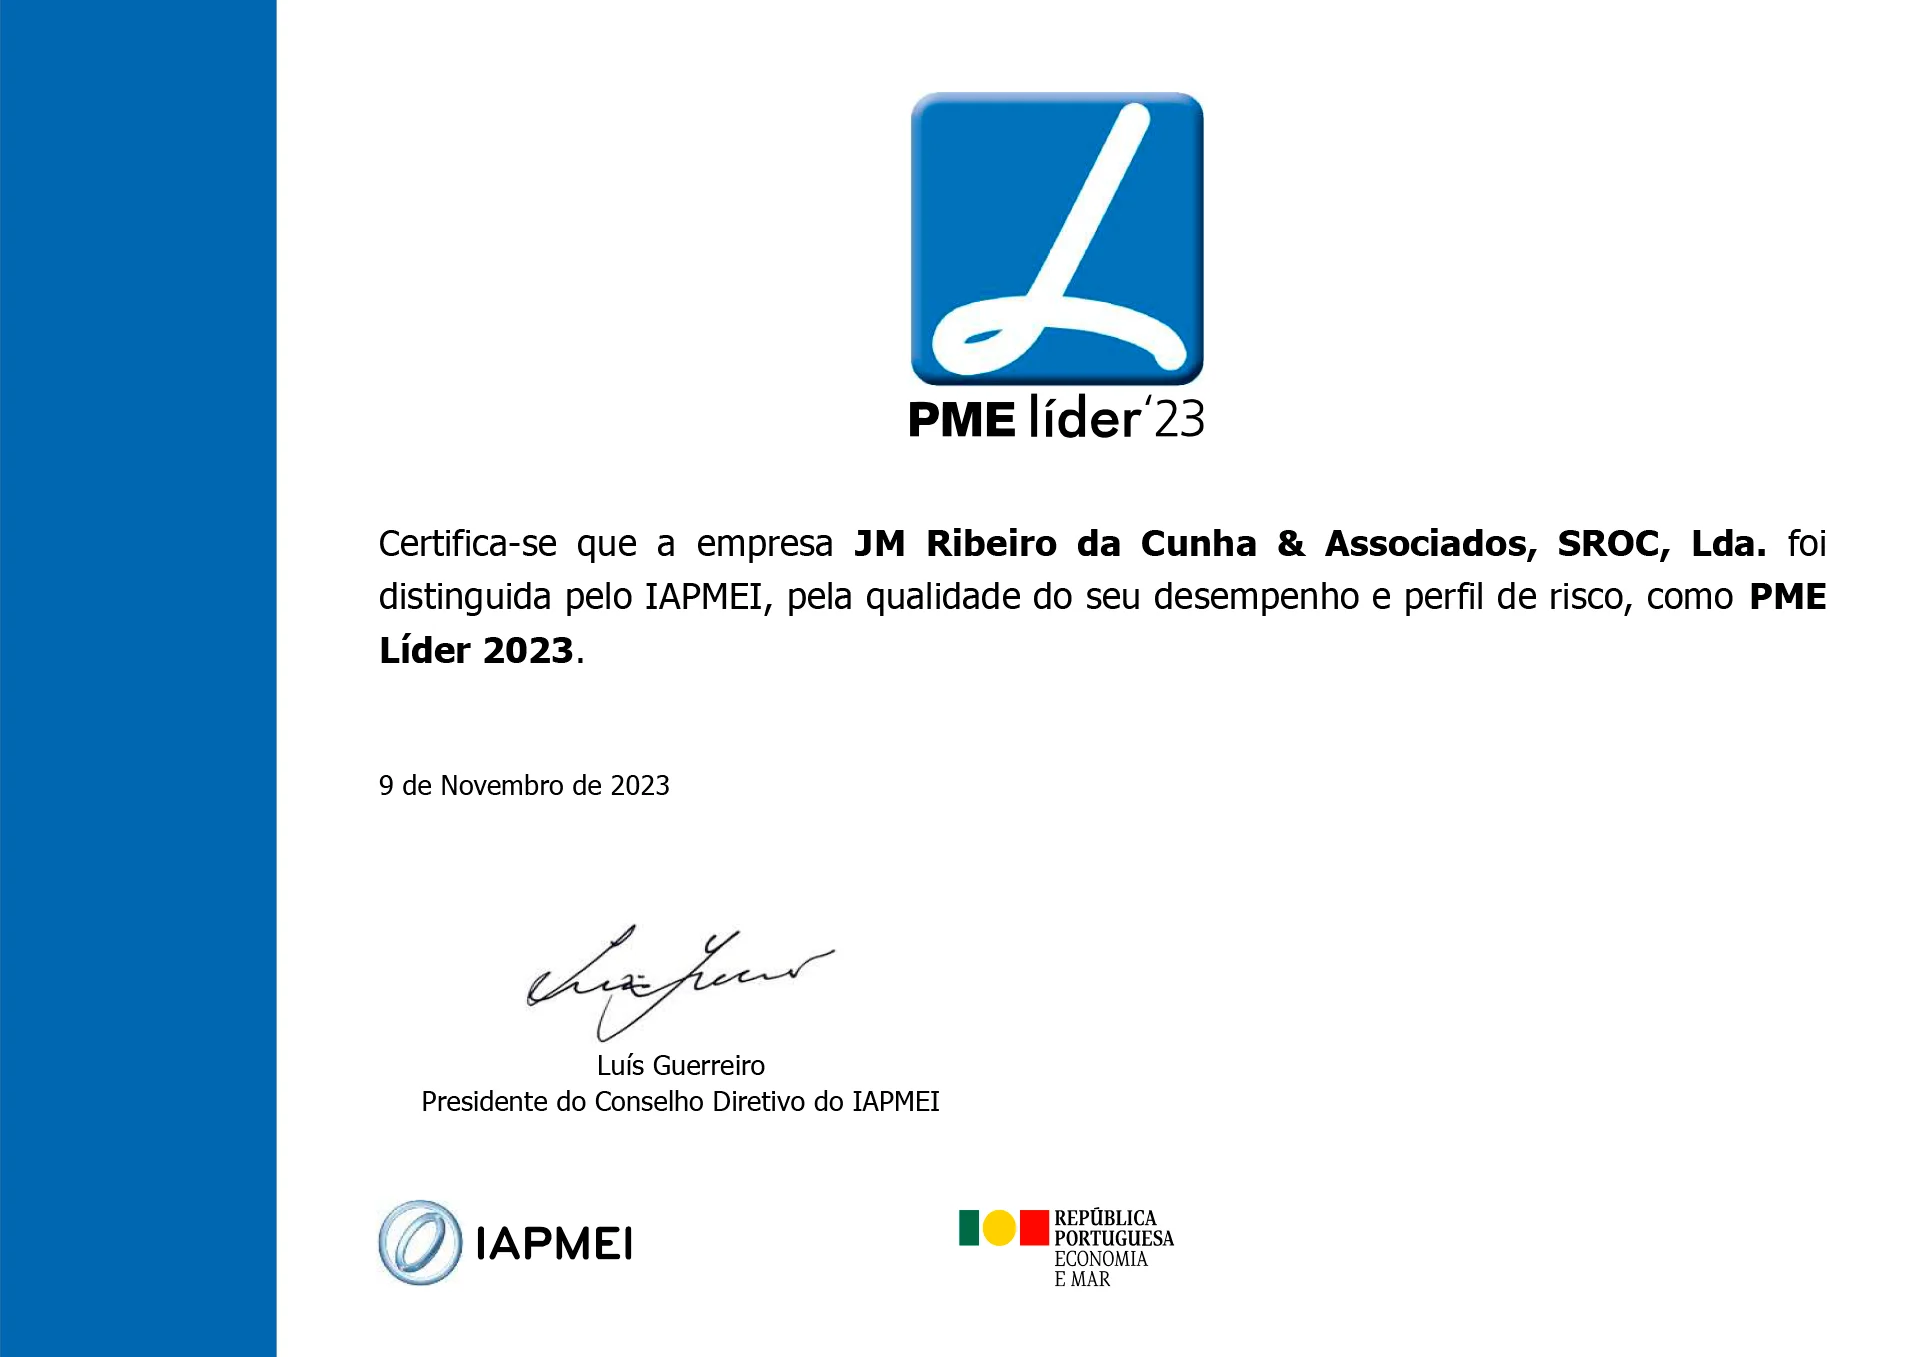 JM Ribeiro da Cunha & Associados distinguida PME Líder 2023